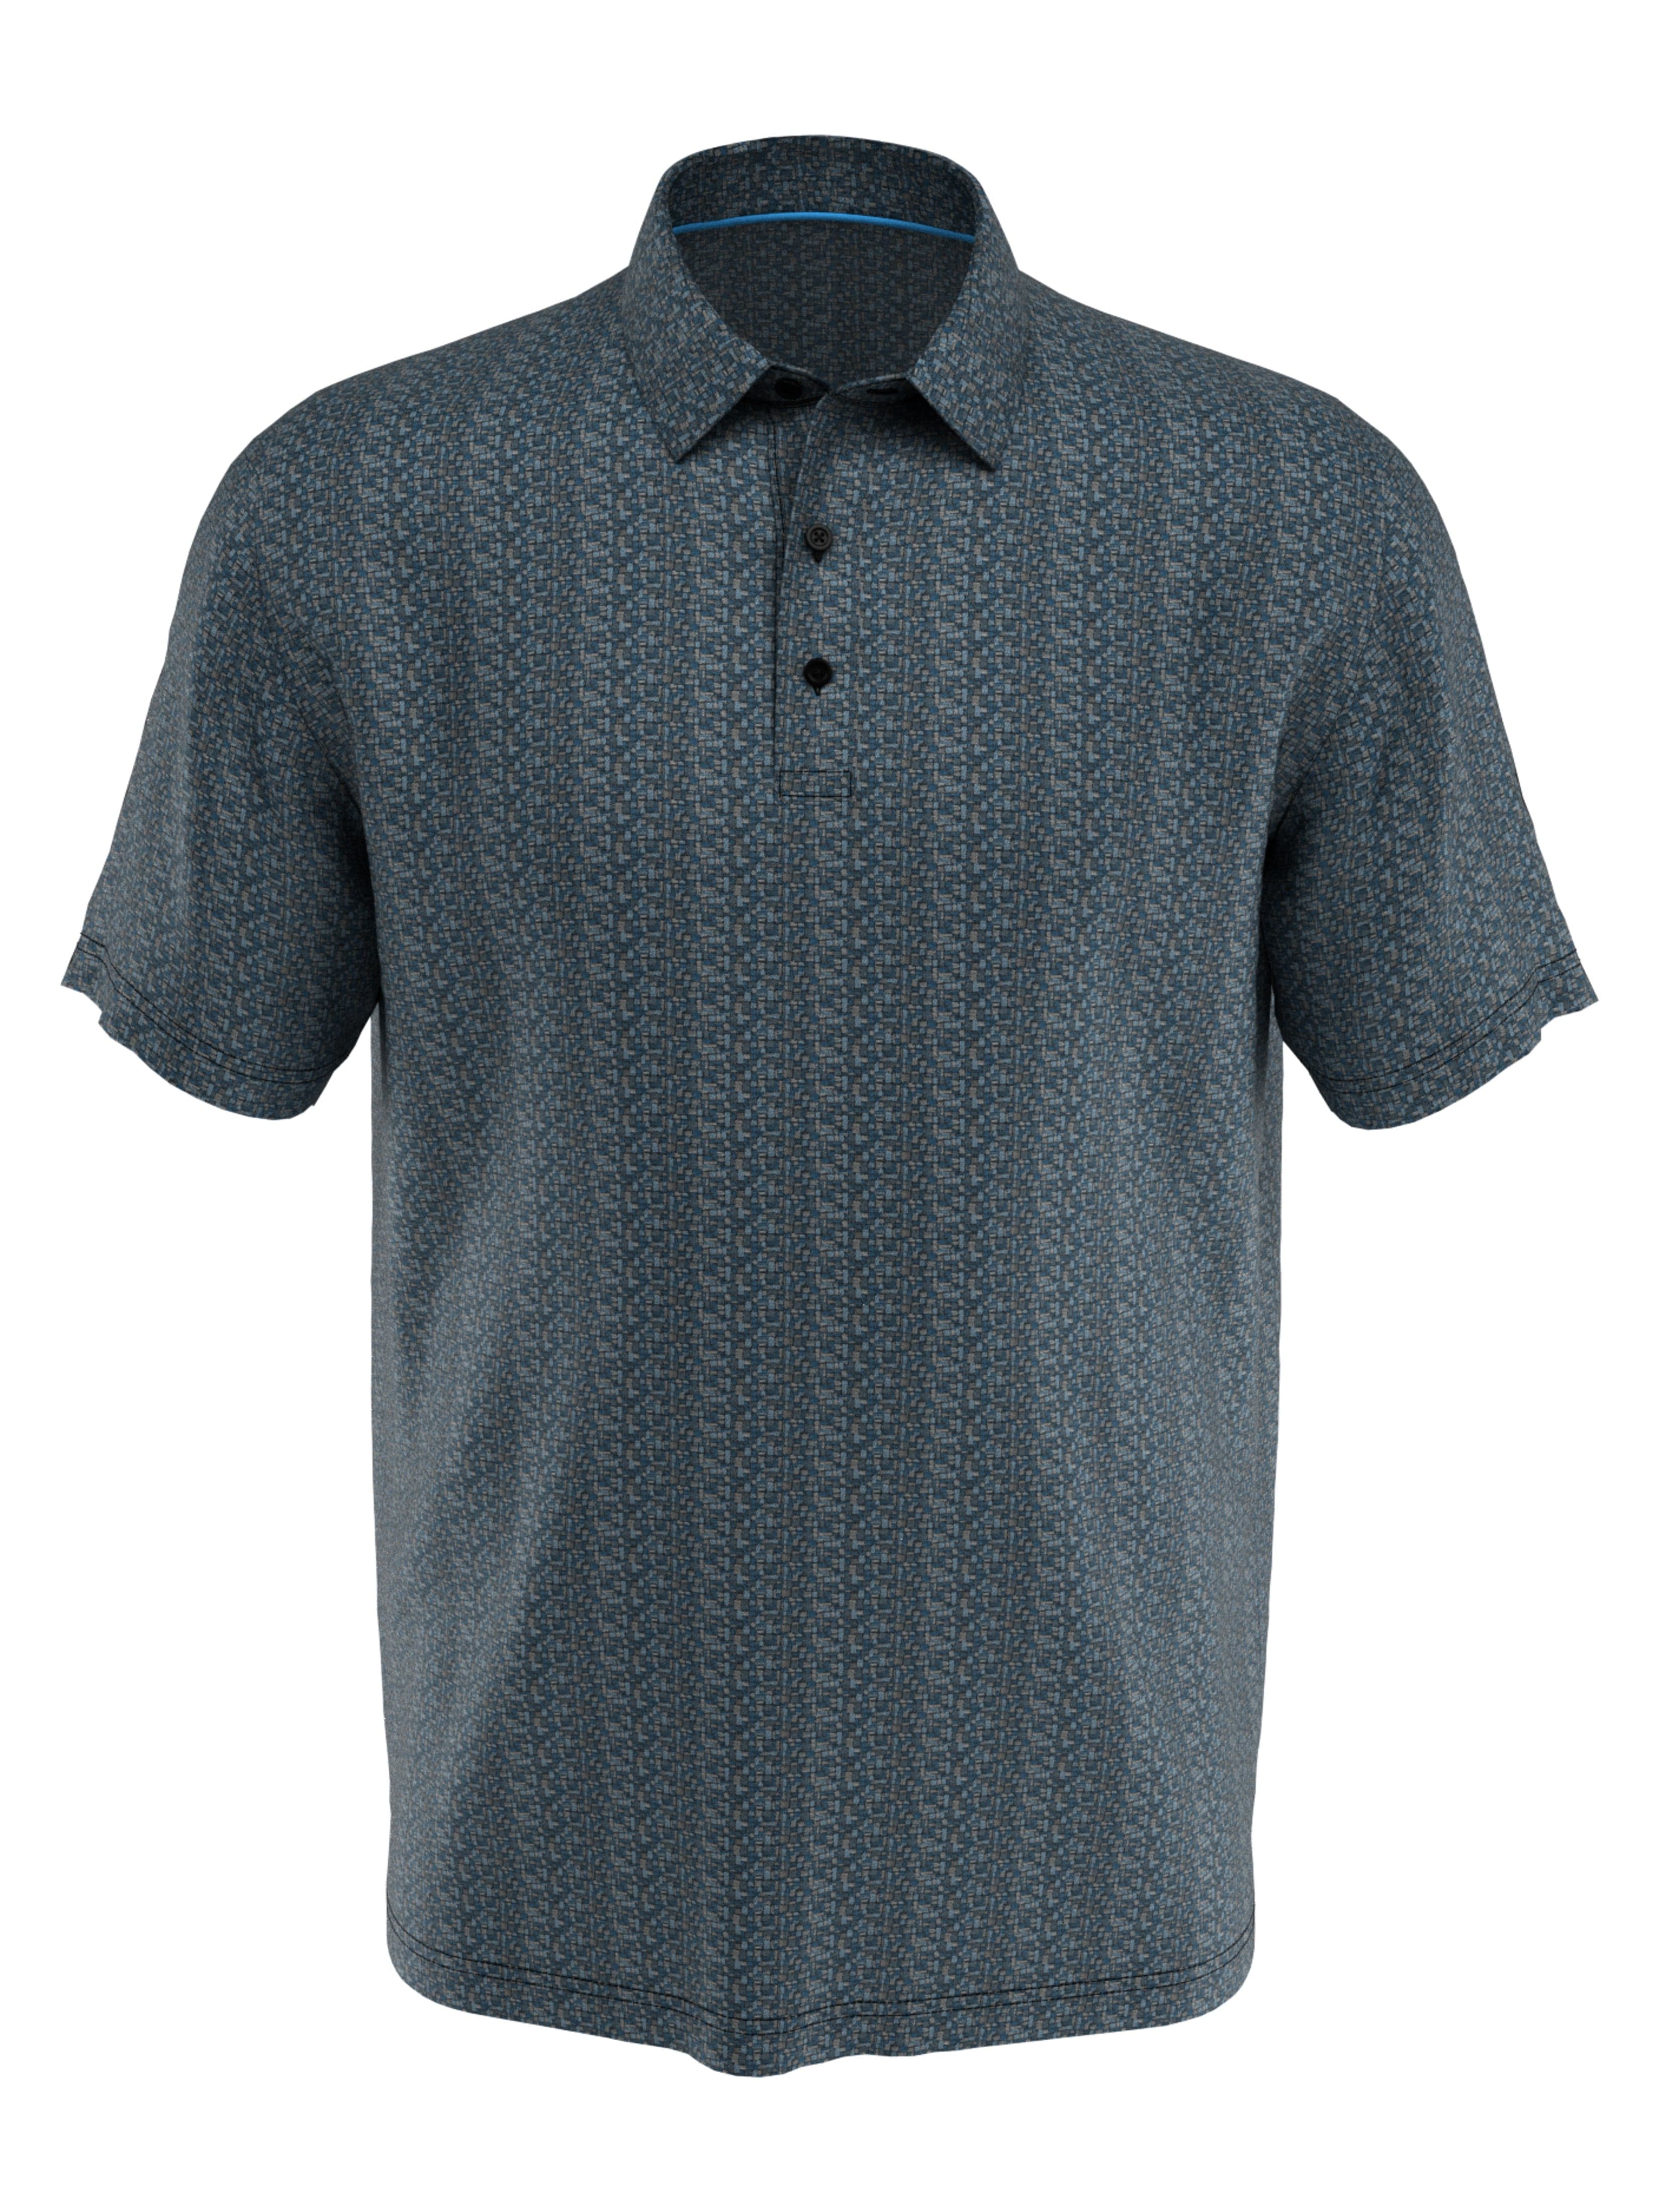 Callaway Apparel Mens Big & Tall Glitched Oxford Print Golf Polo Shirt, Size 5X, Black, Polyester/Cotton/Elastane | Golf Apparel Shop